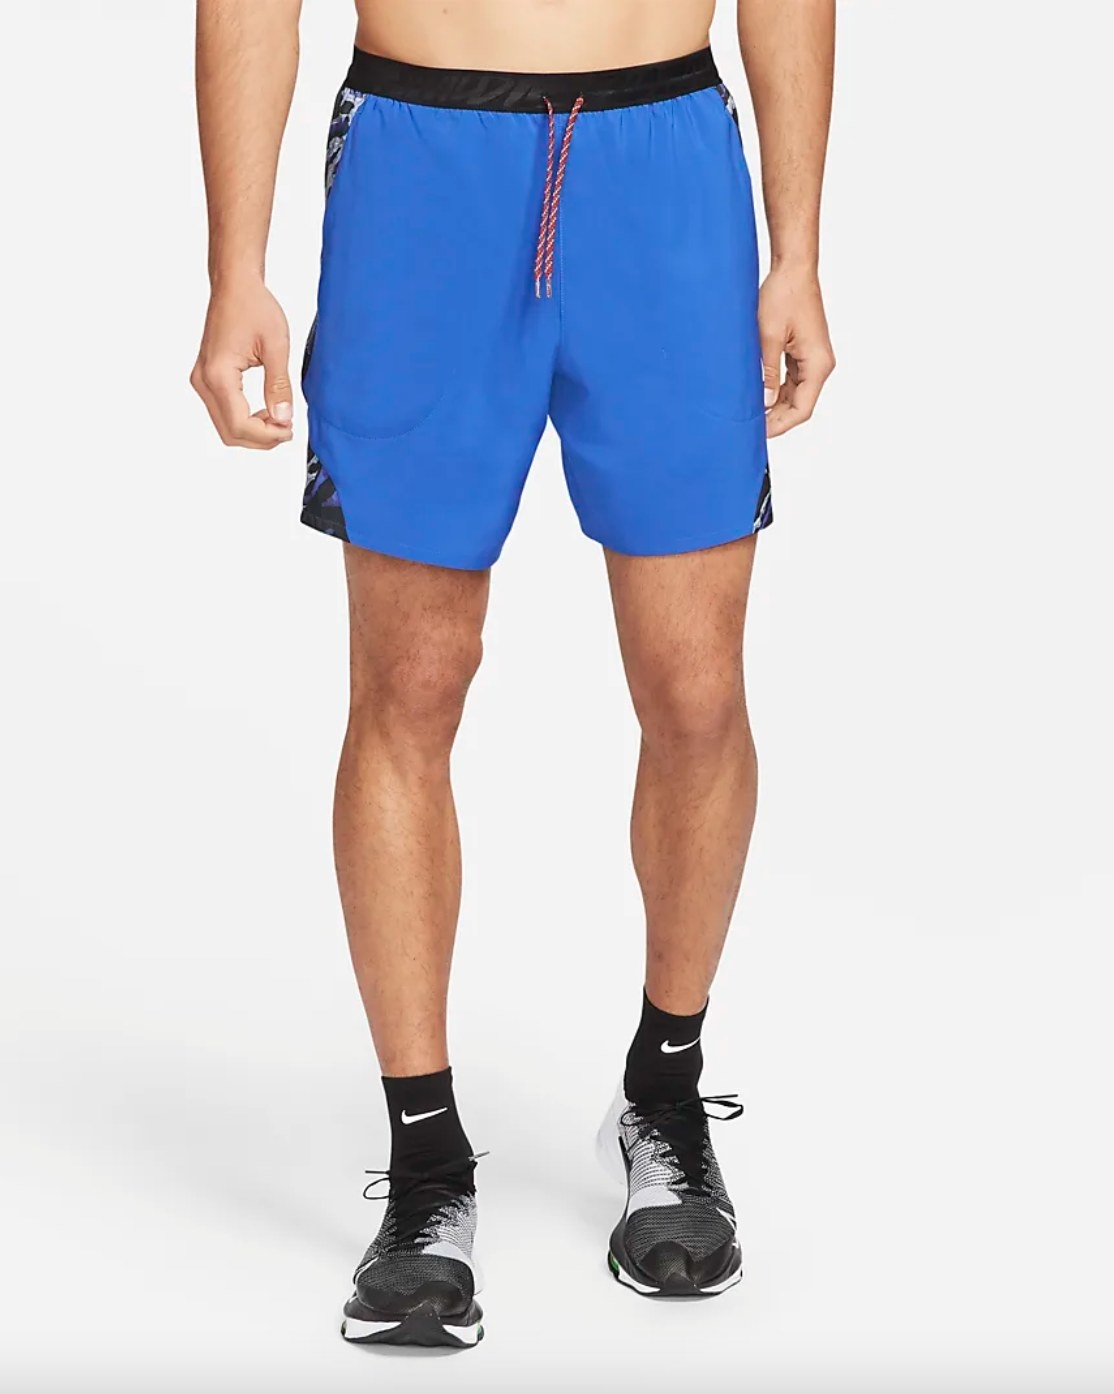 The Nike flex stride shorts in blue